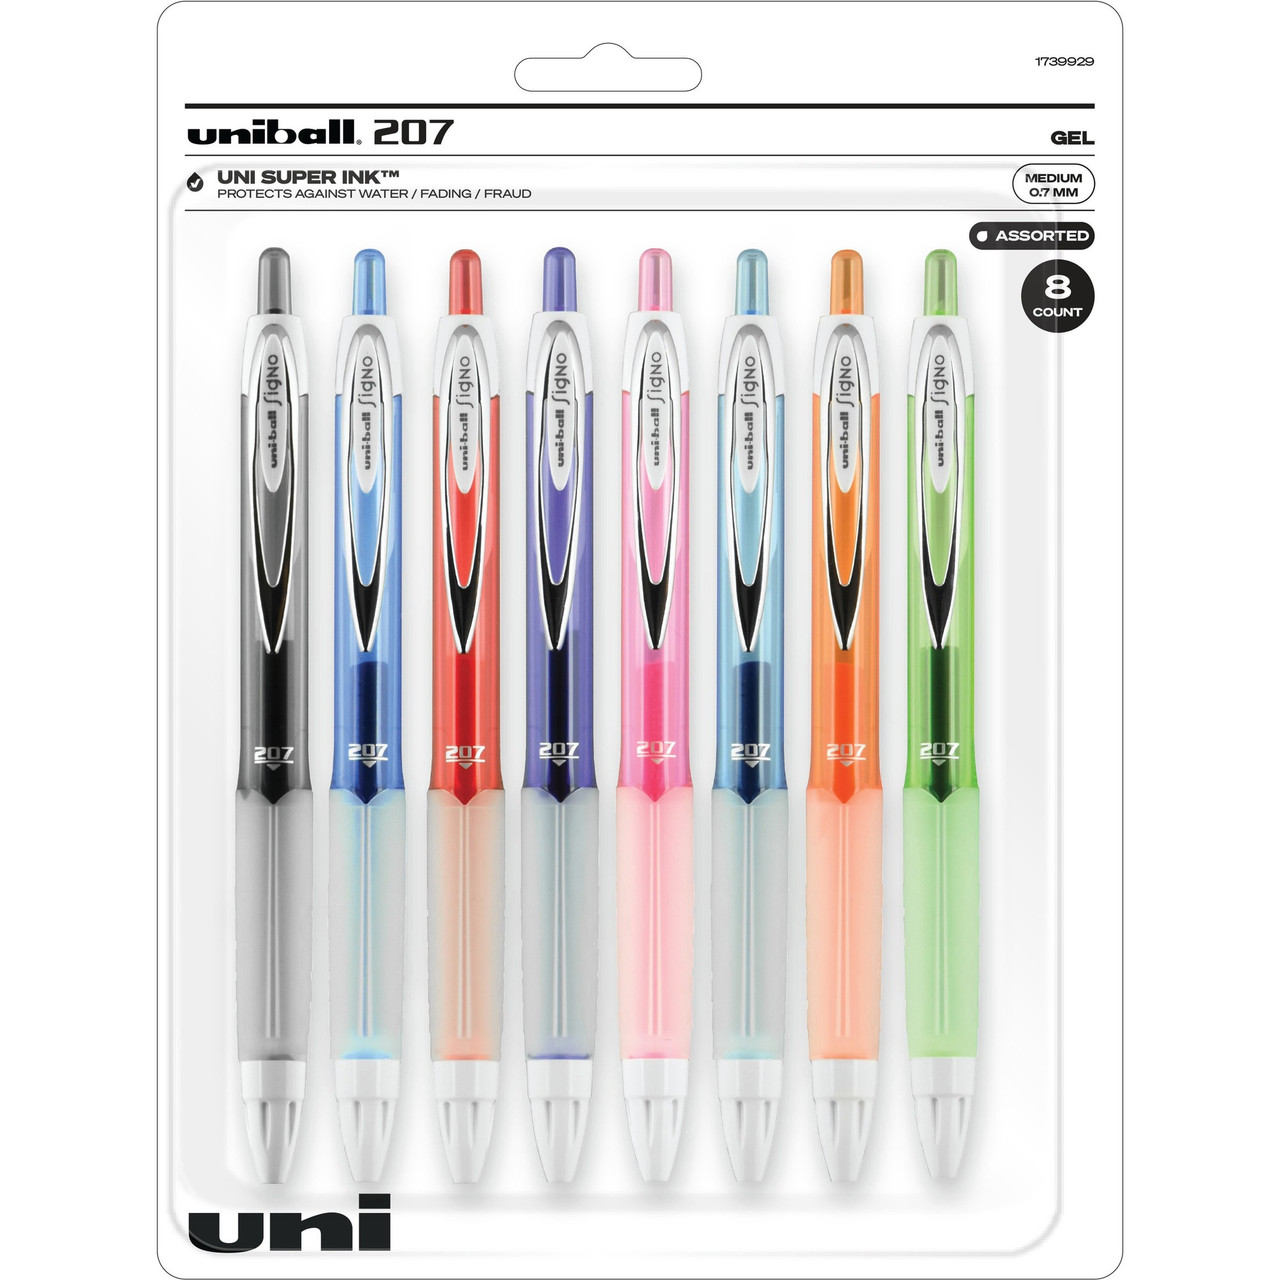 Uniball 207 Gel Premier Pens